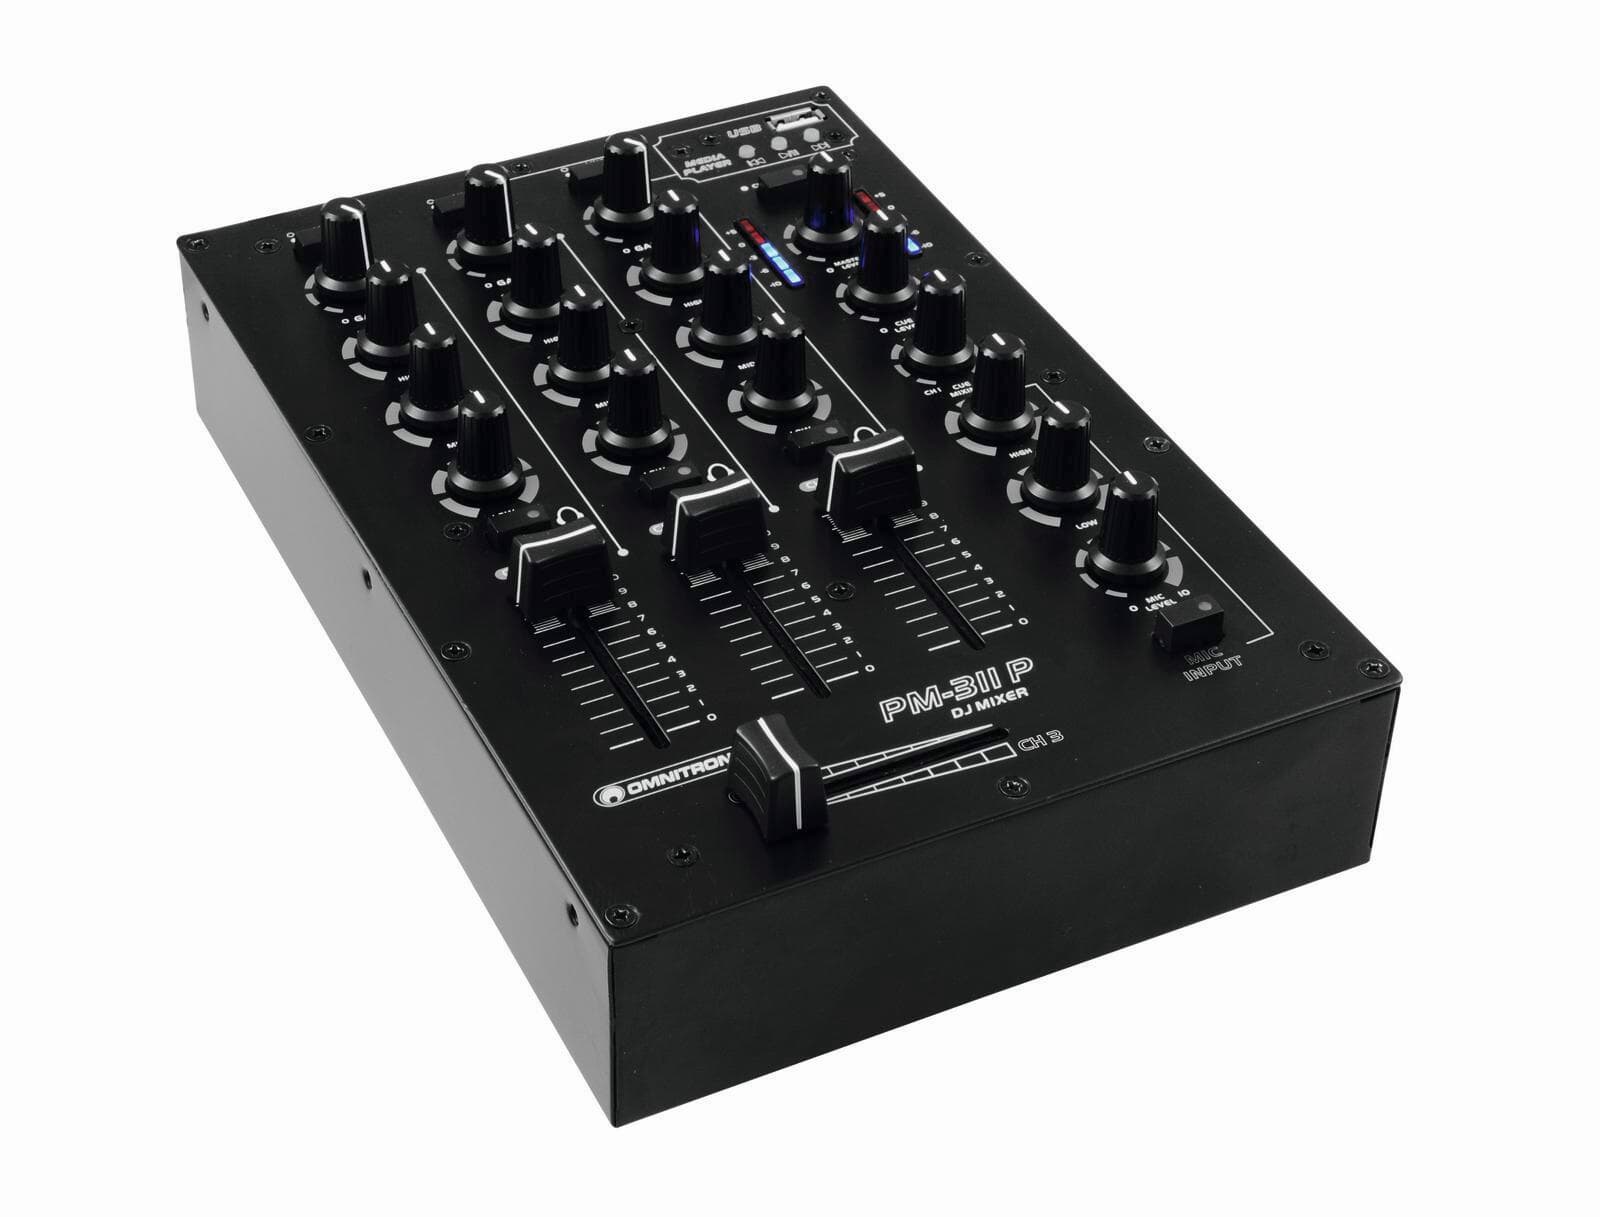 OMNITRONIC PM-311P DJ-Mixer 3-Kanal mit MP3-Player